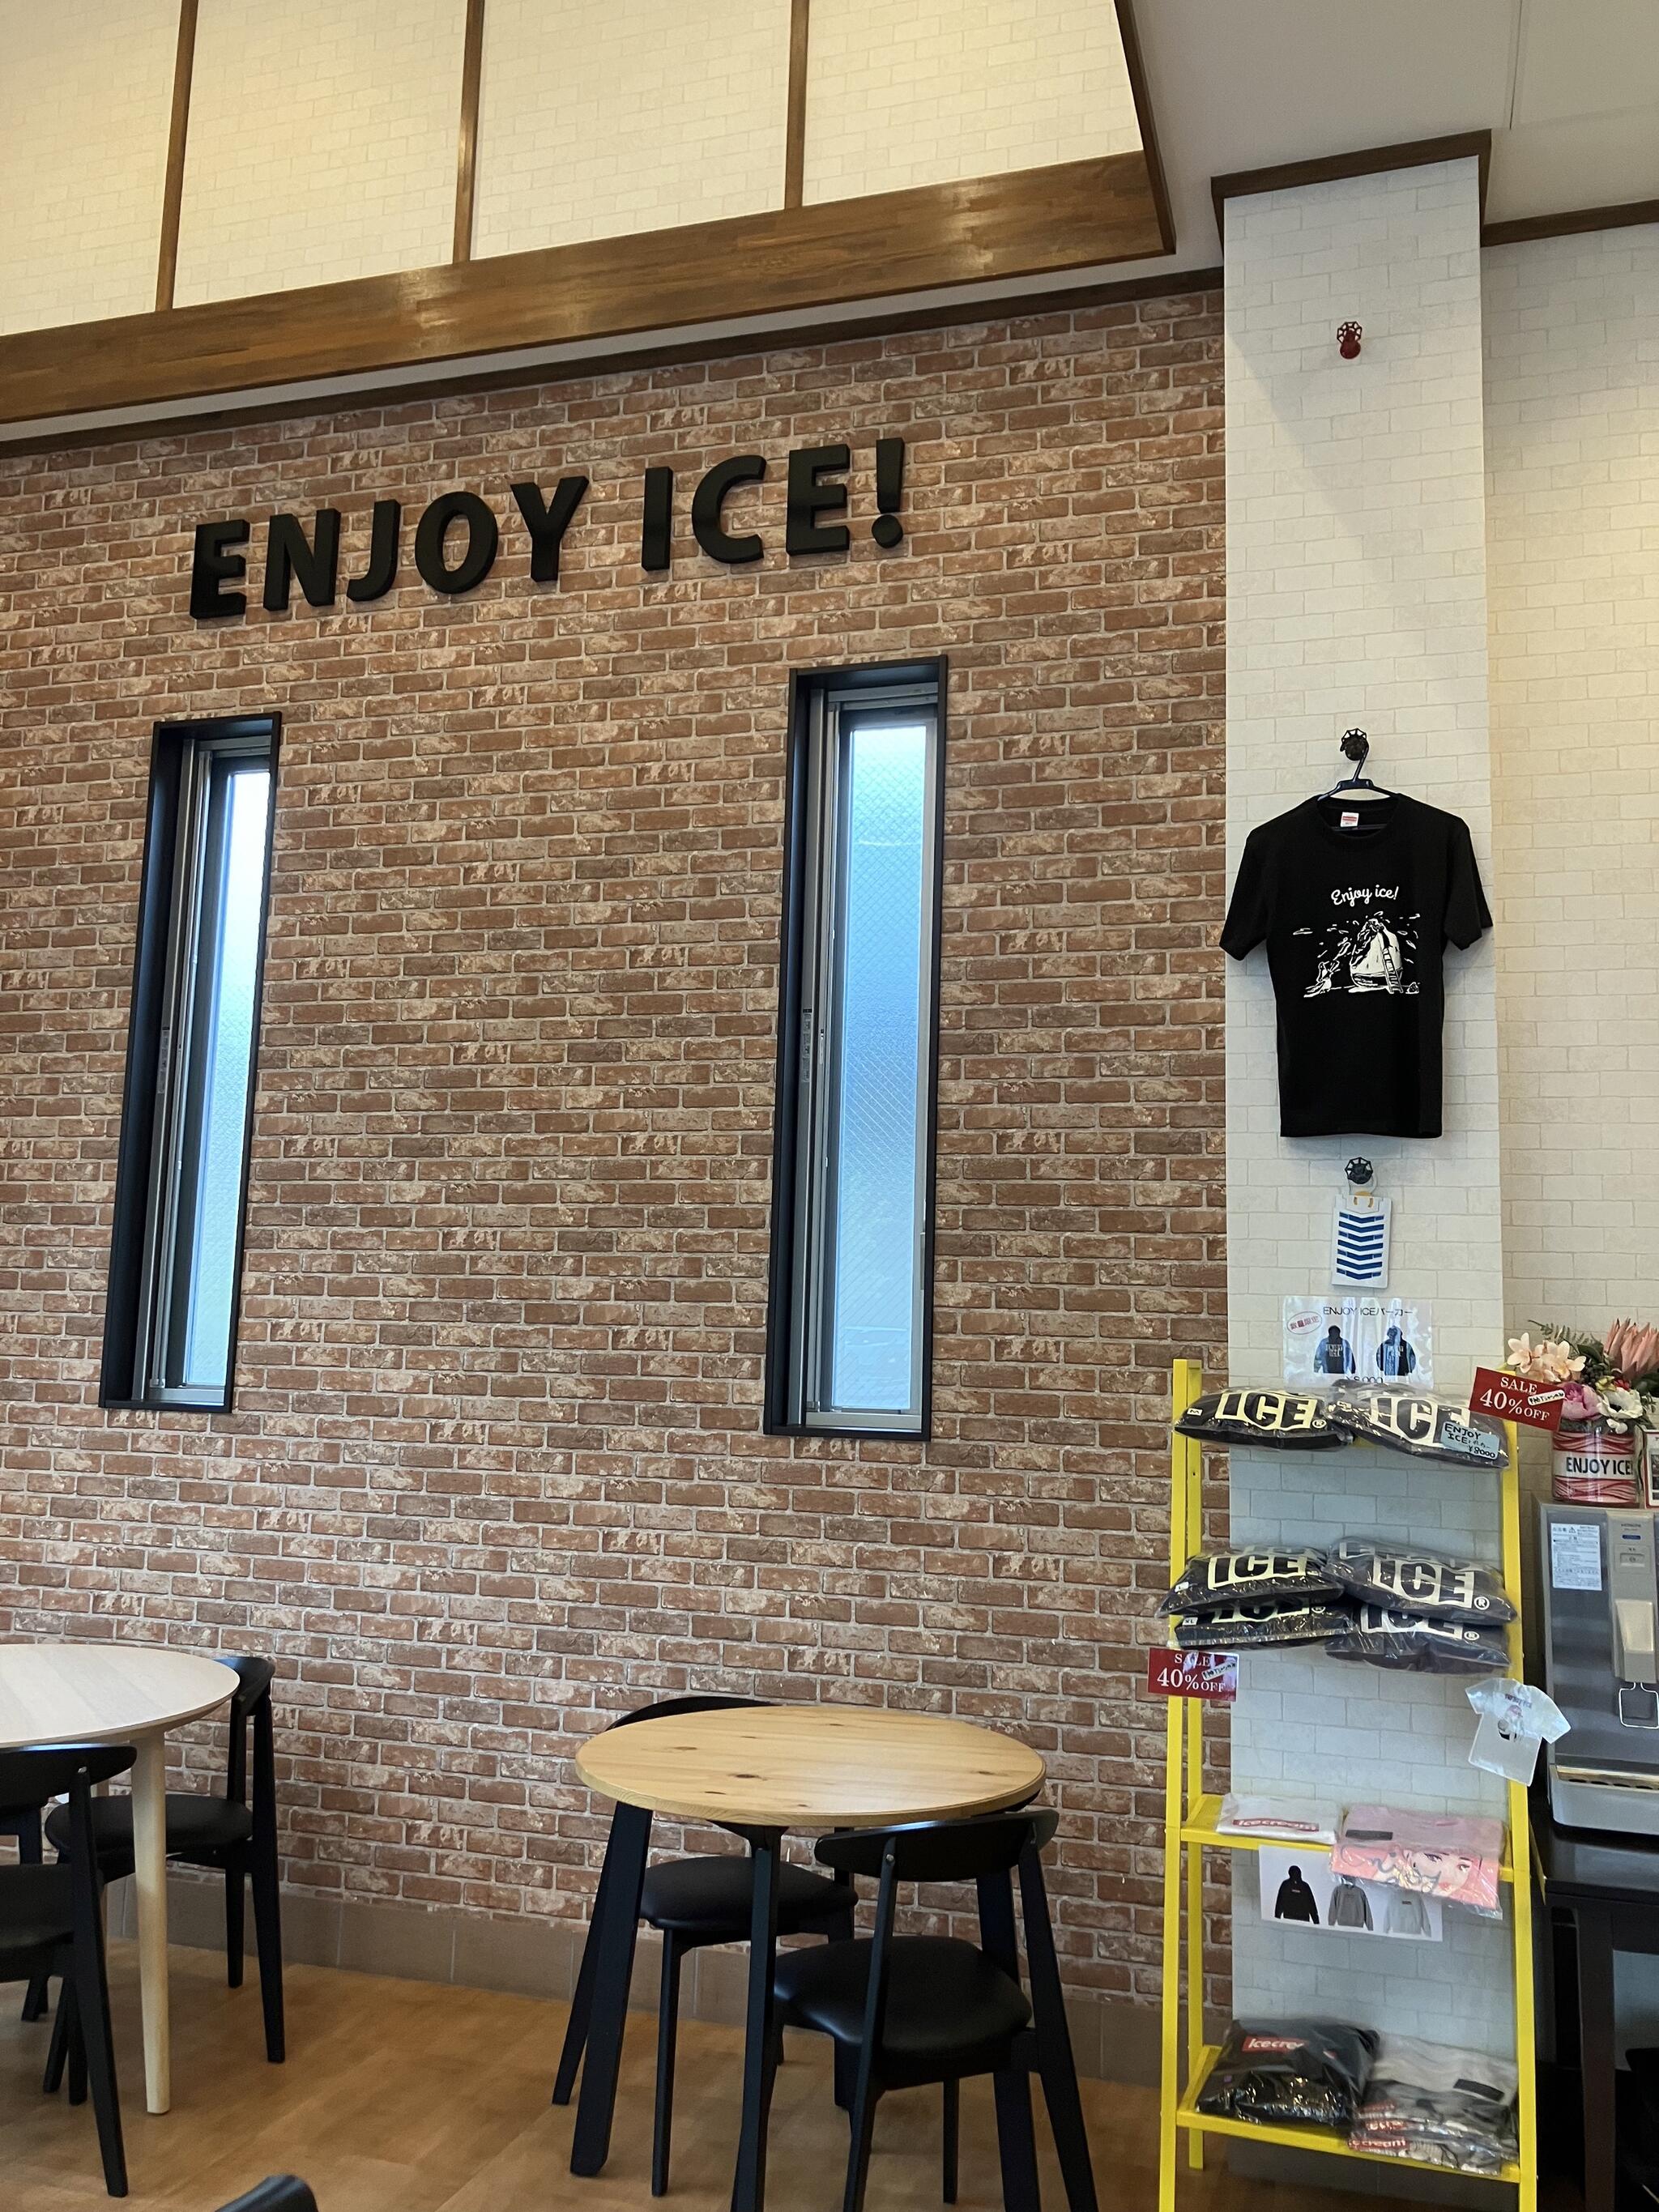 Ice cafe’ 弘水 -KOSUI-の代表写真2